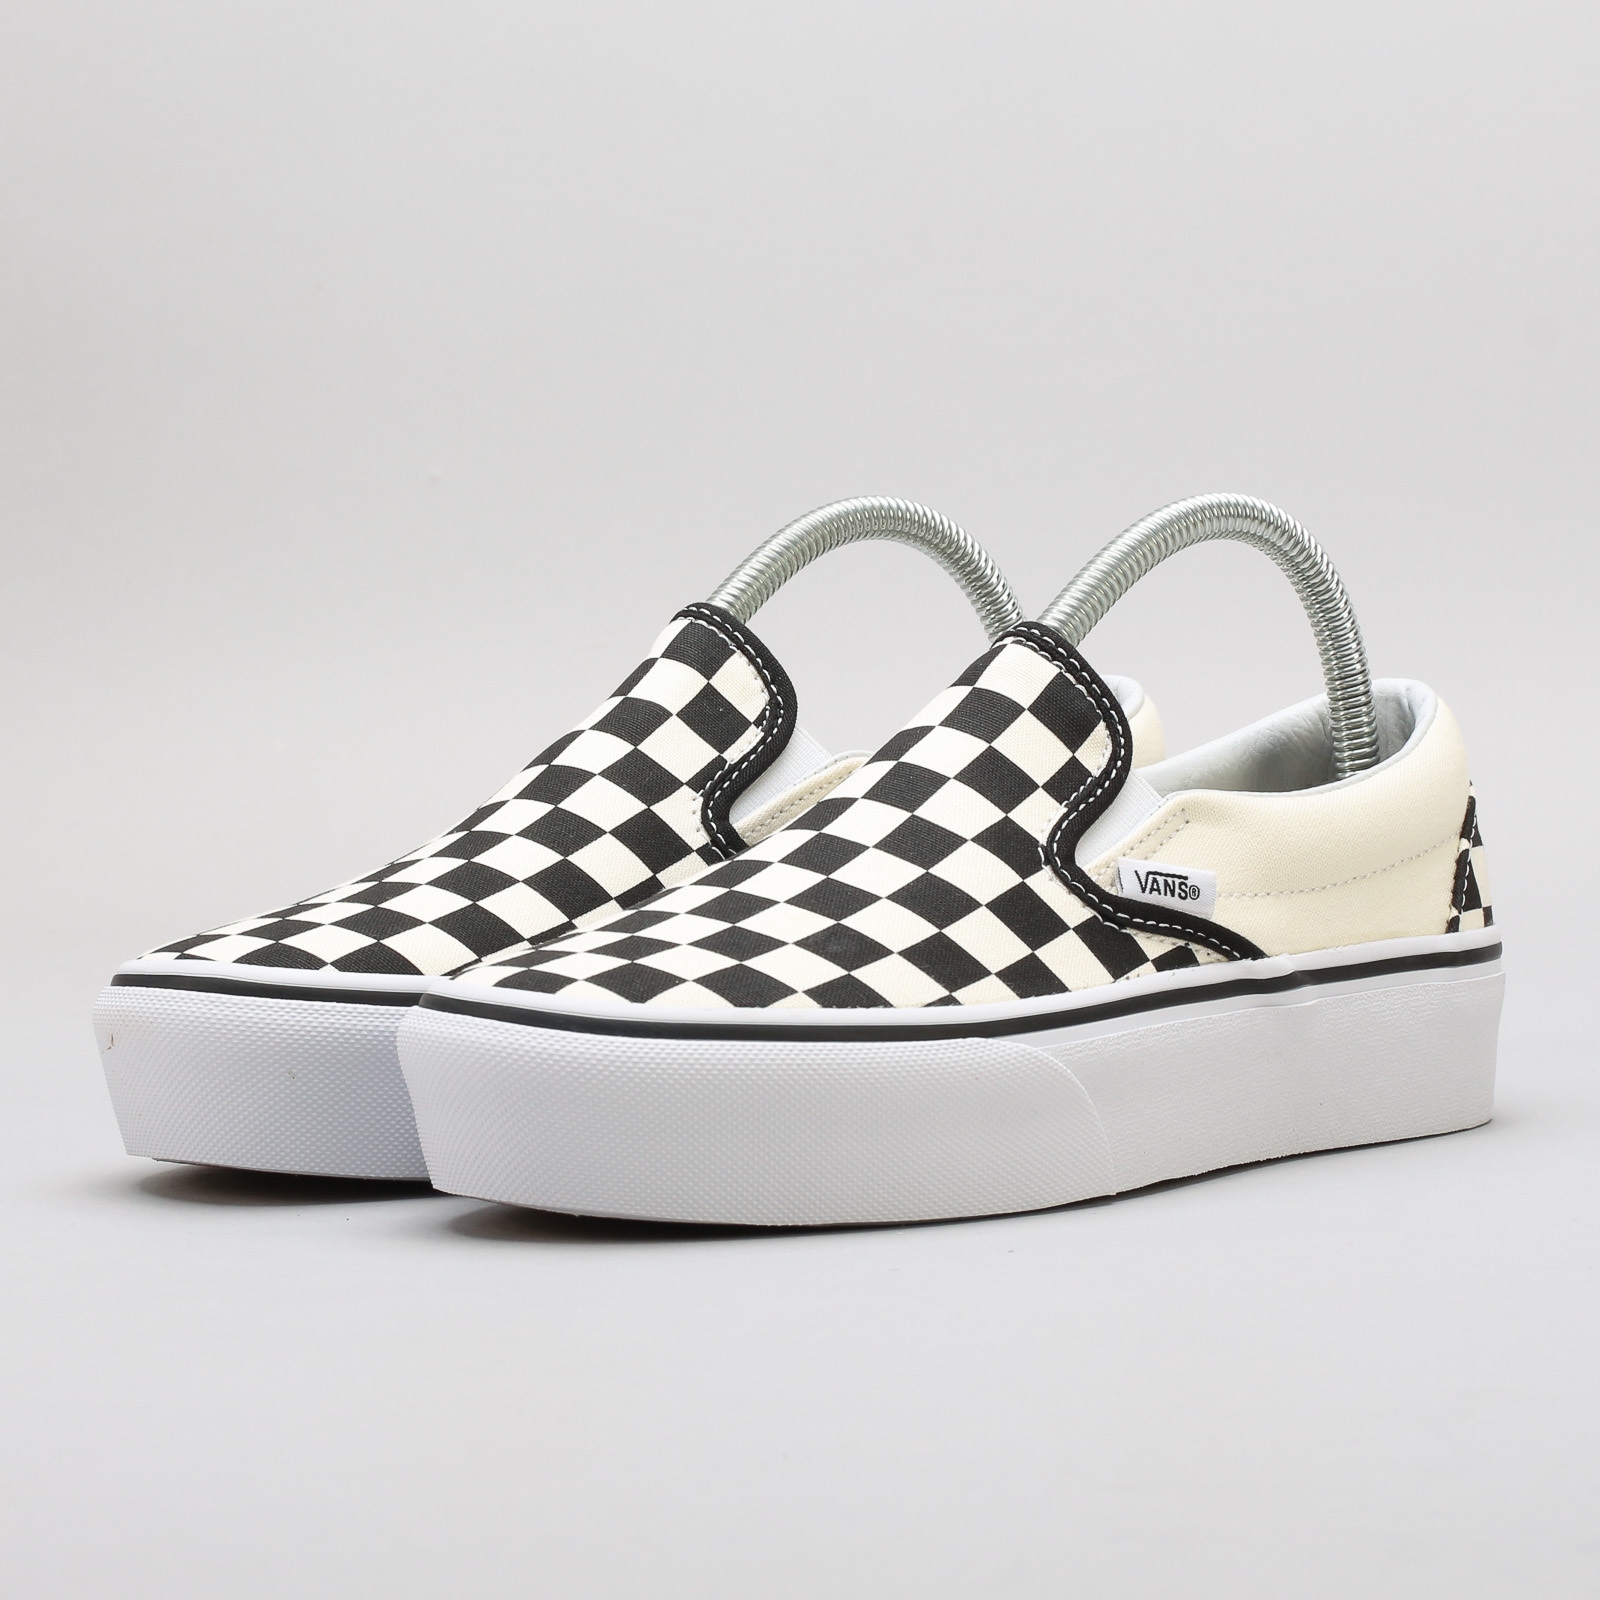 Vans Classic Slip-On Platform black & white checkerboard / white Vans